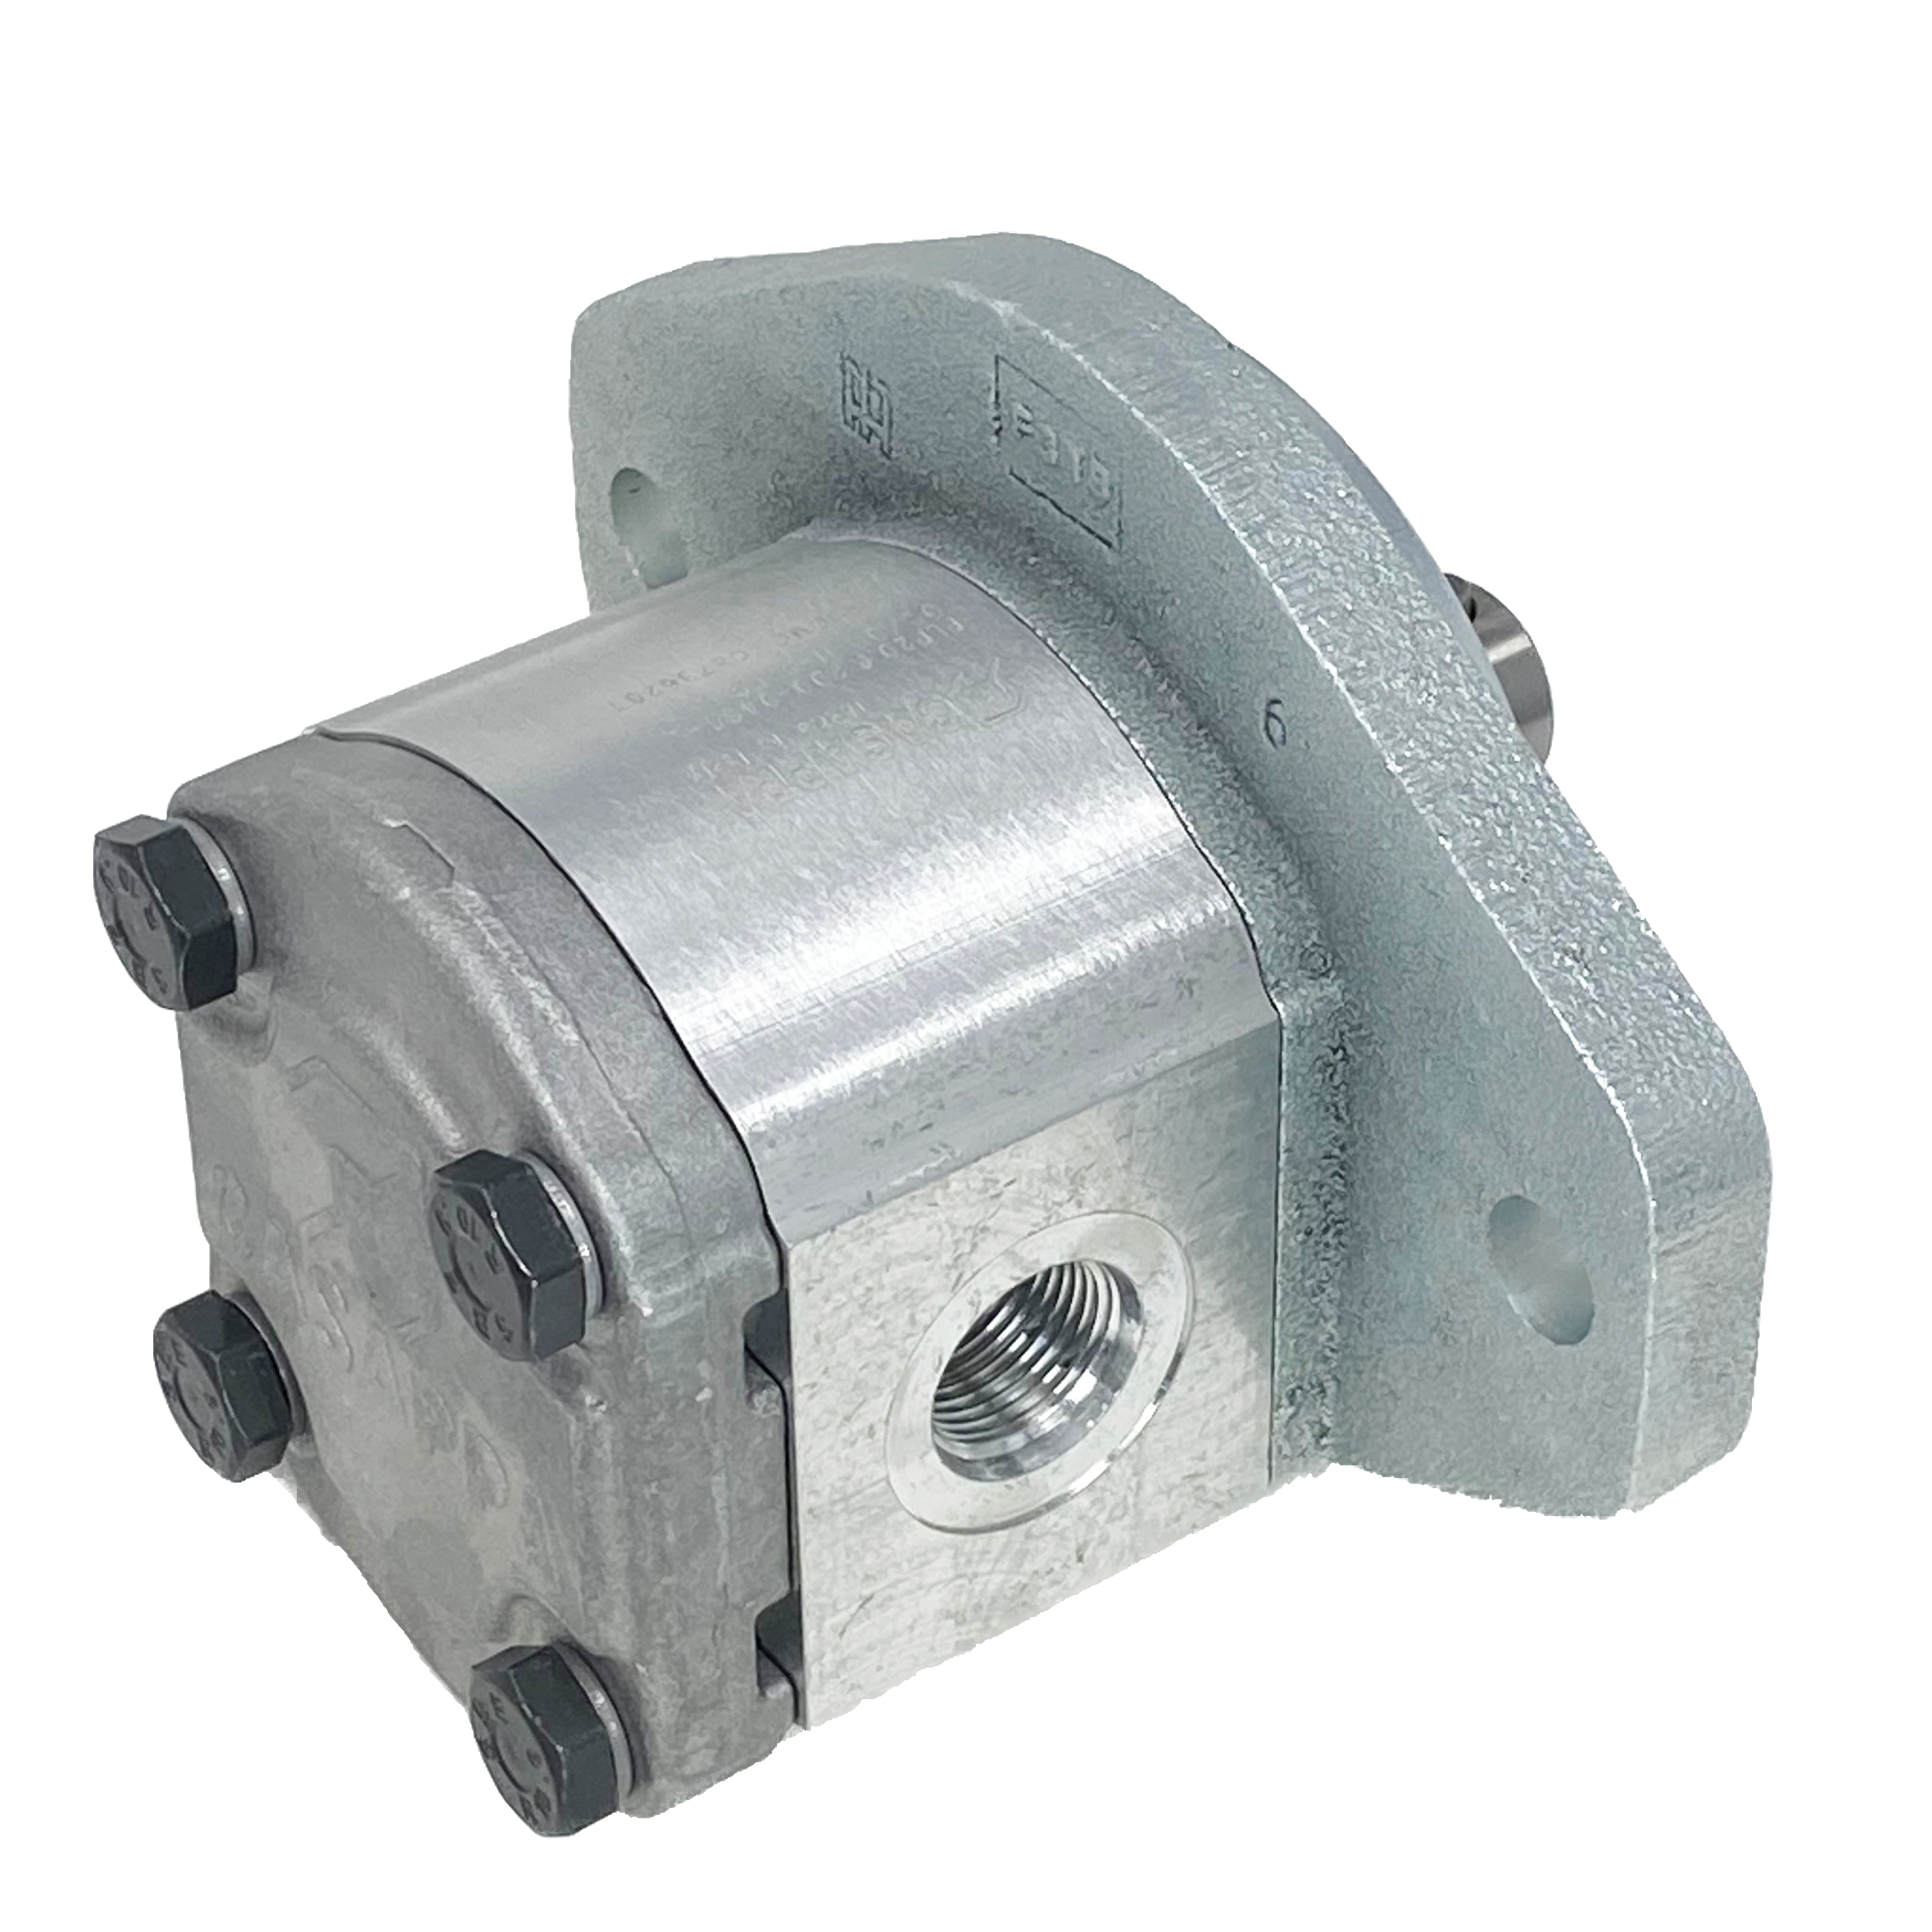 PLM20.11,2B0-31S1-LOC/OC-N-EL : Casappa Polaris Gear Motor, 11.23cc, 3625psi Rated, 3500RPM, Reversible Interior Drain, 5/8" Bore x 5/32" Key Shaft, SAE A 2-Bolt Flange, 0.625 (5/8") #10 SAE Inlet, 0.625 (5/8") #10 SAE Outlet, Aluminum Body & Flange